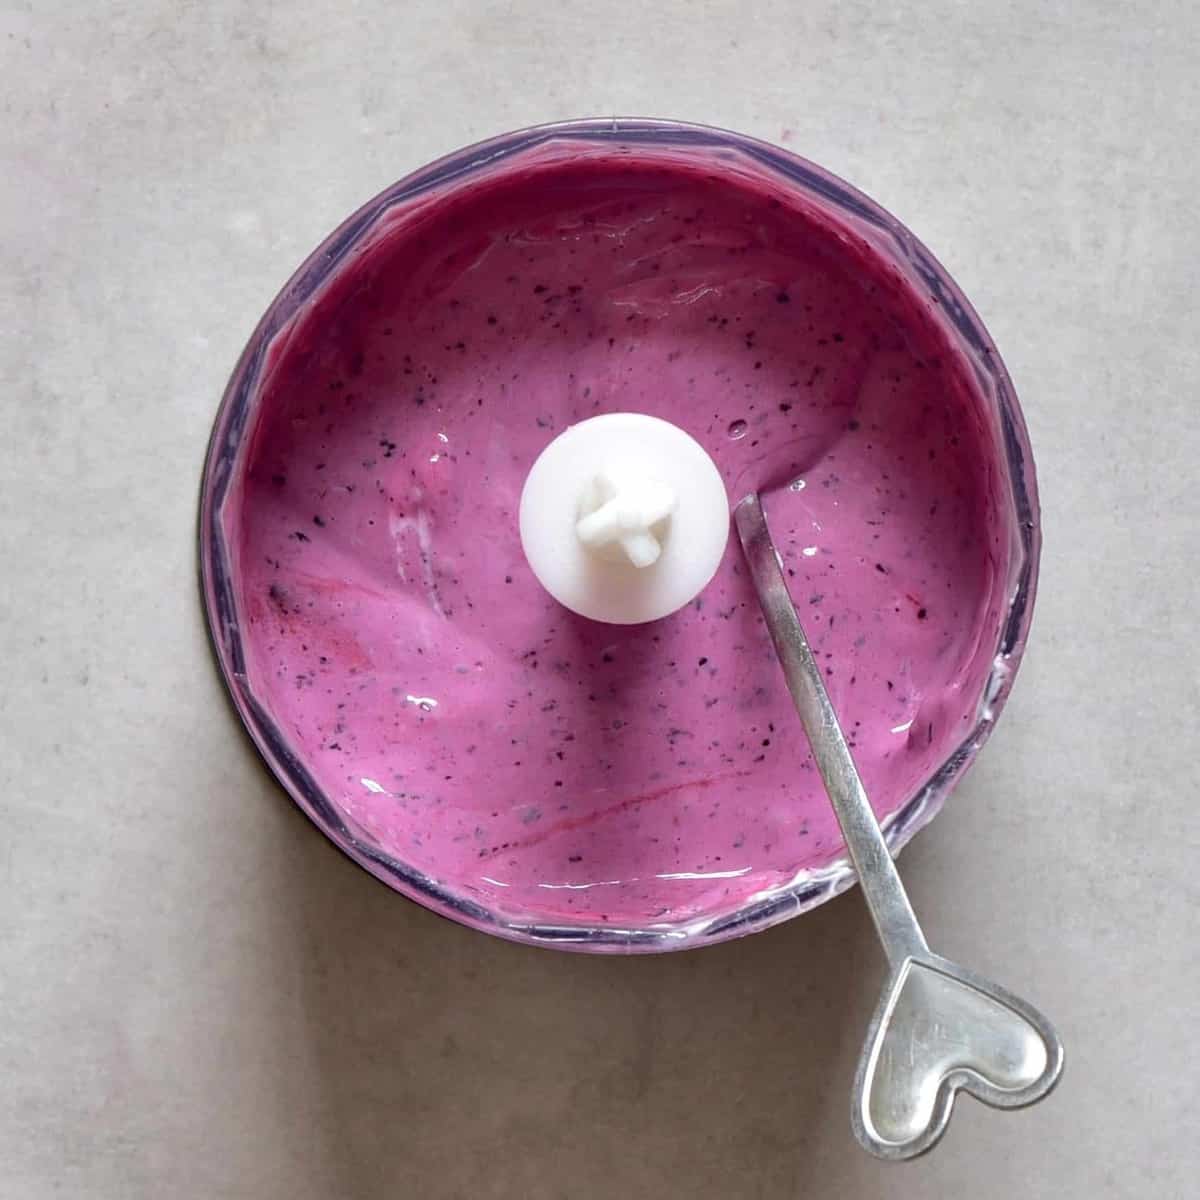 Blueberry yogurt